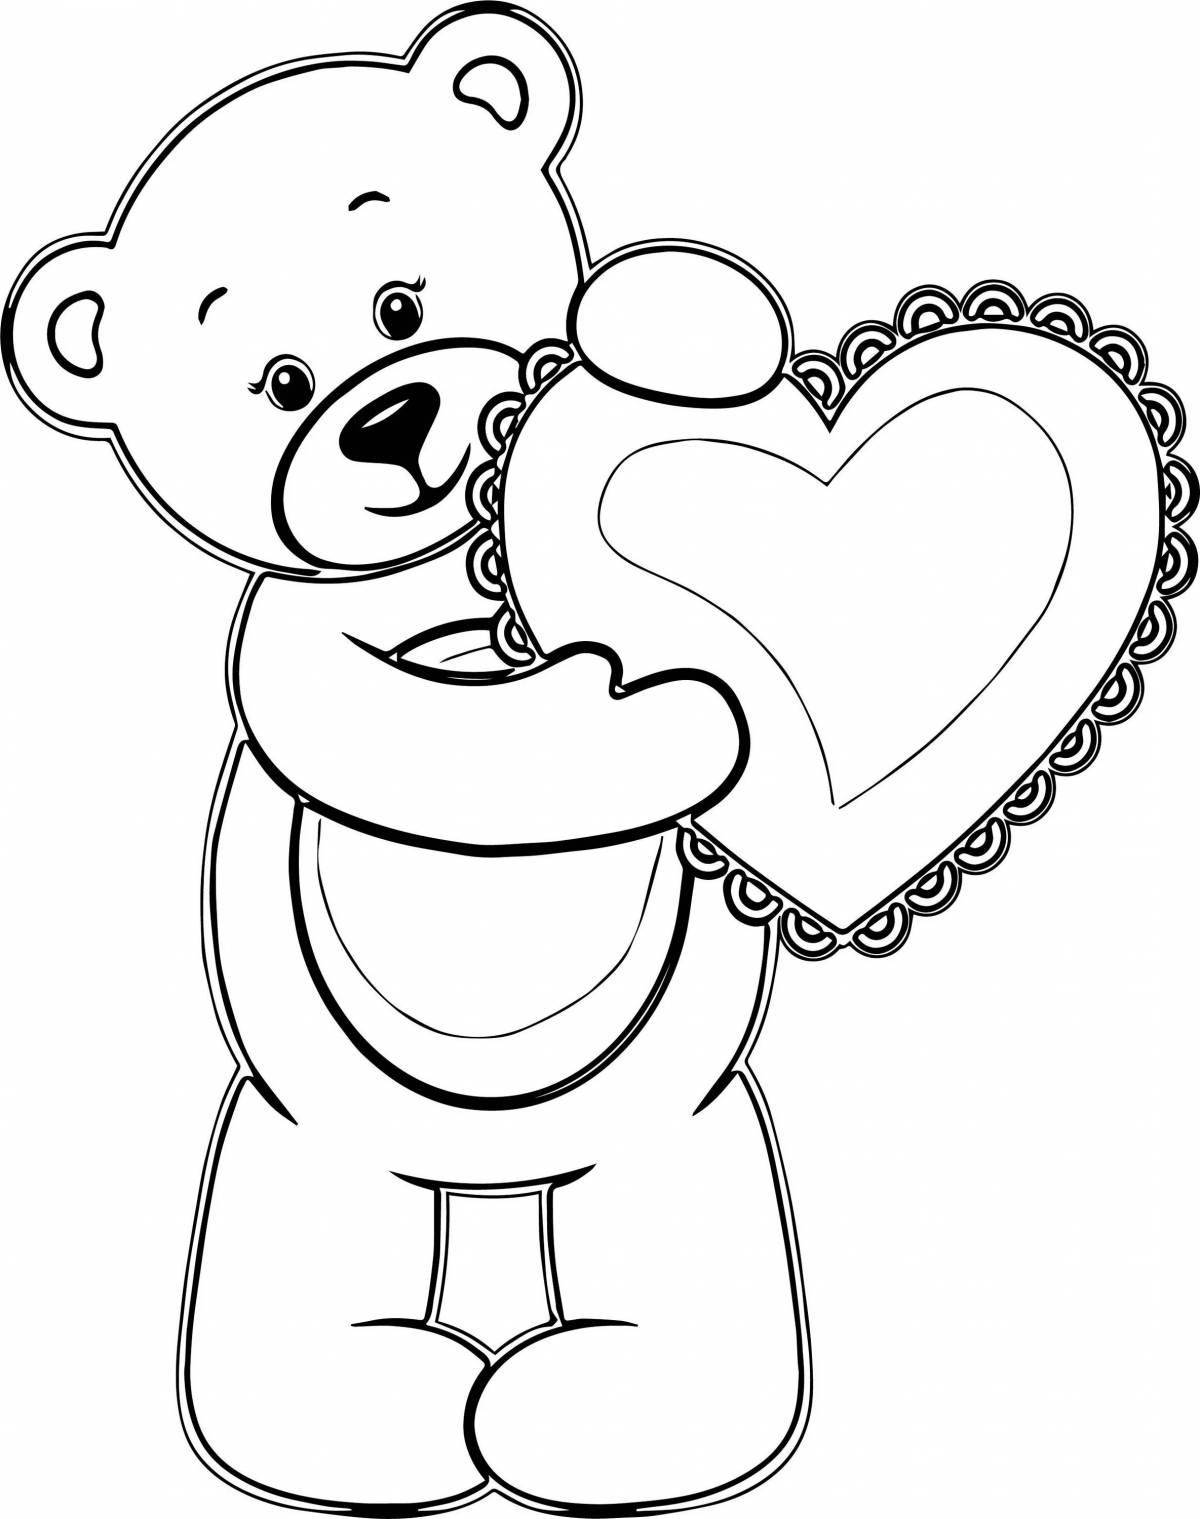 Раскраска добрый медведь с сердцем